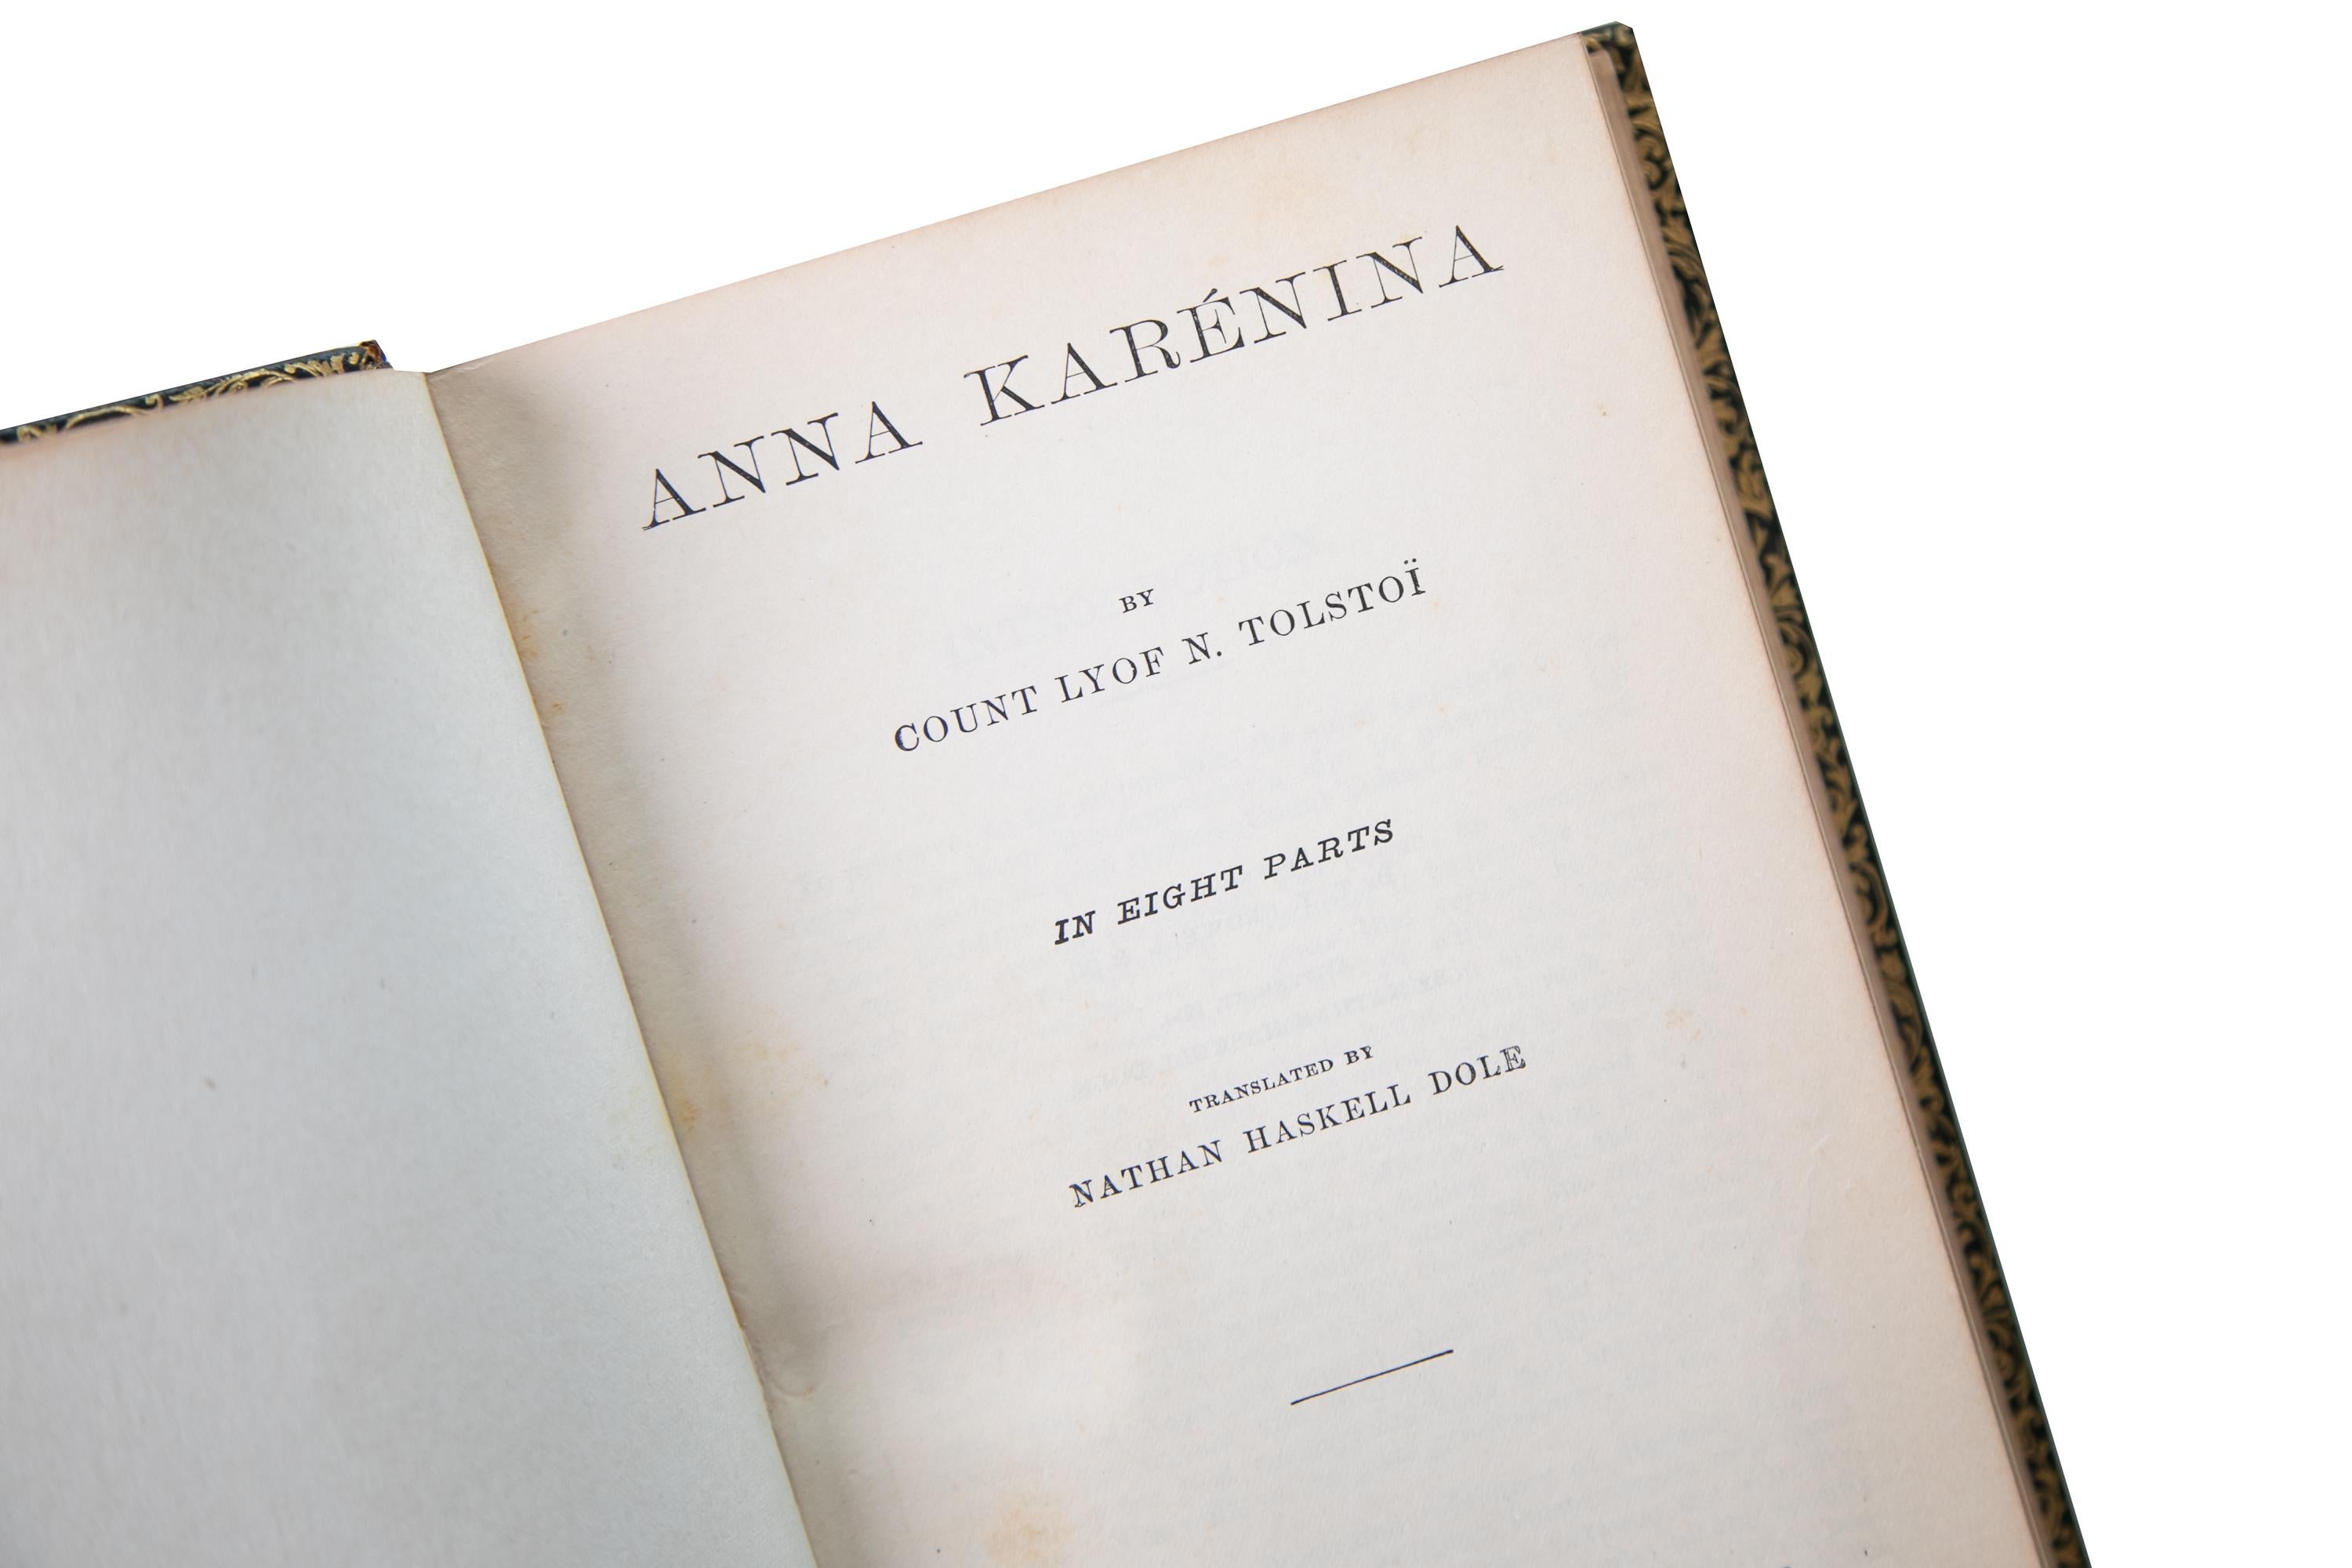 when was anna karenina first published